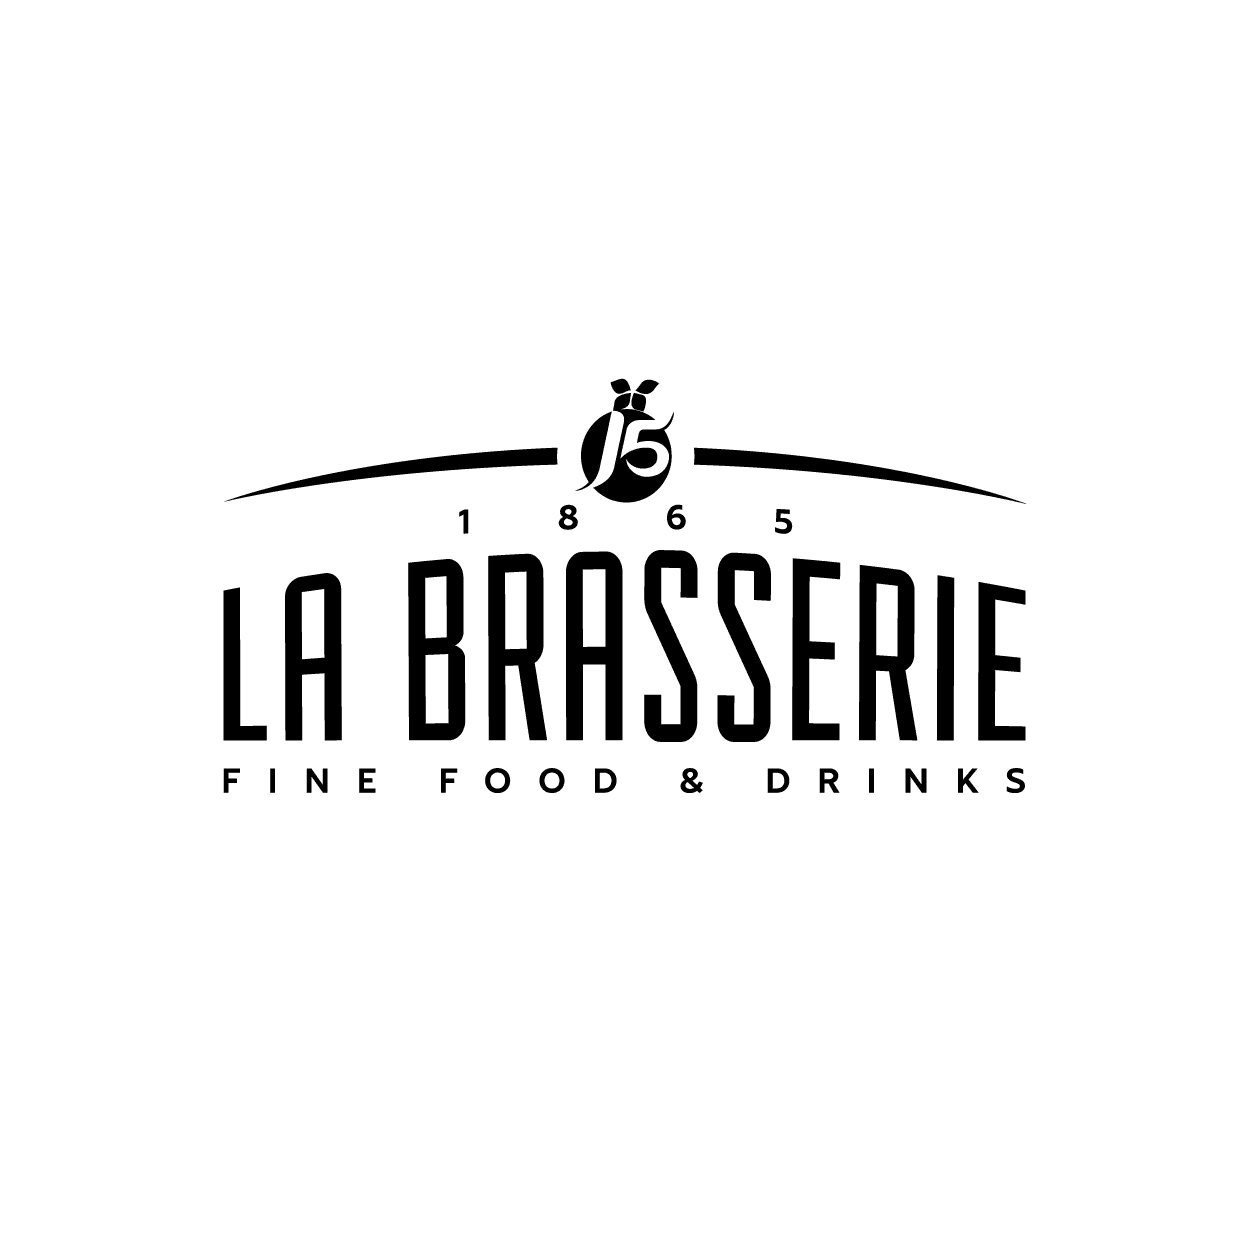 Logo Brasserie